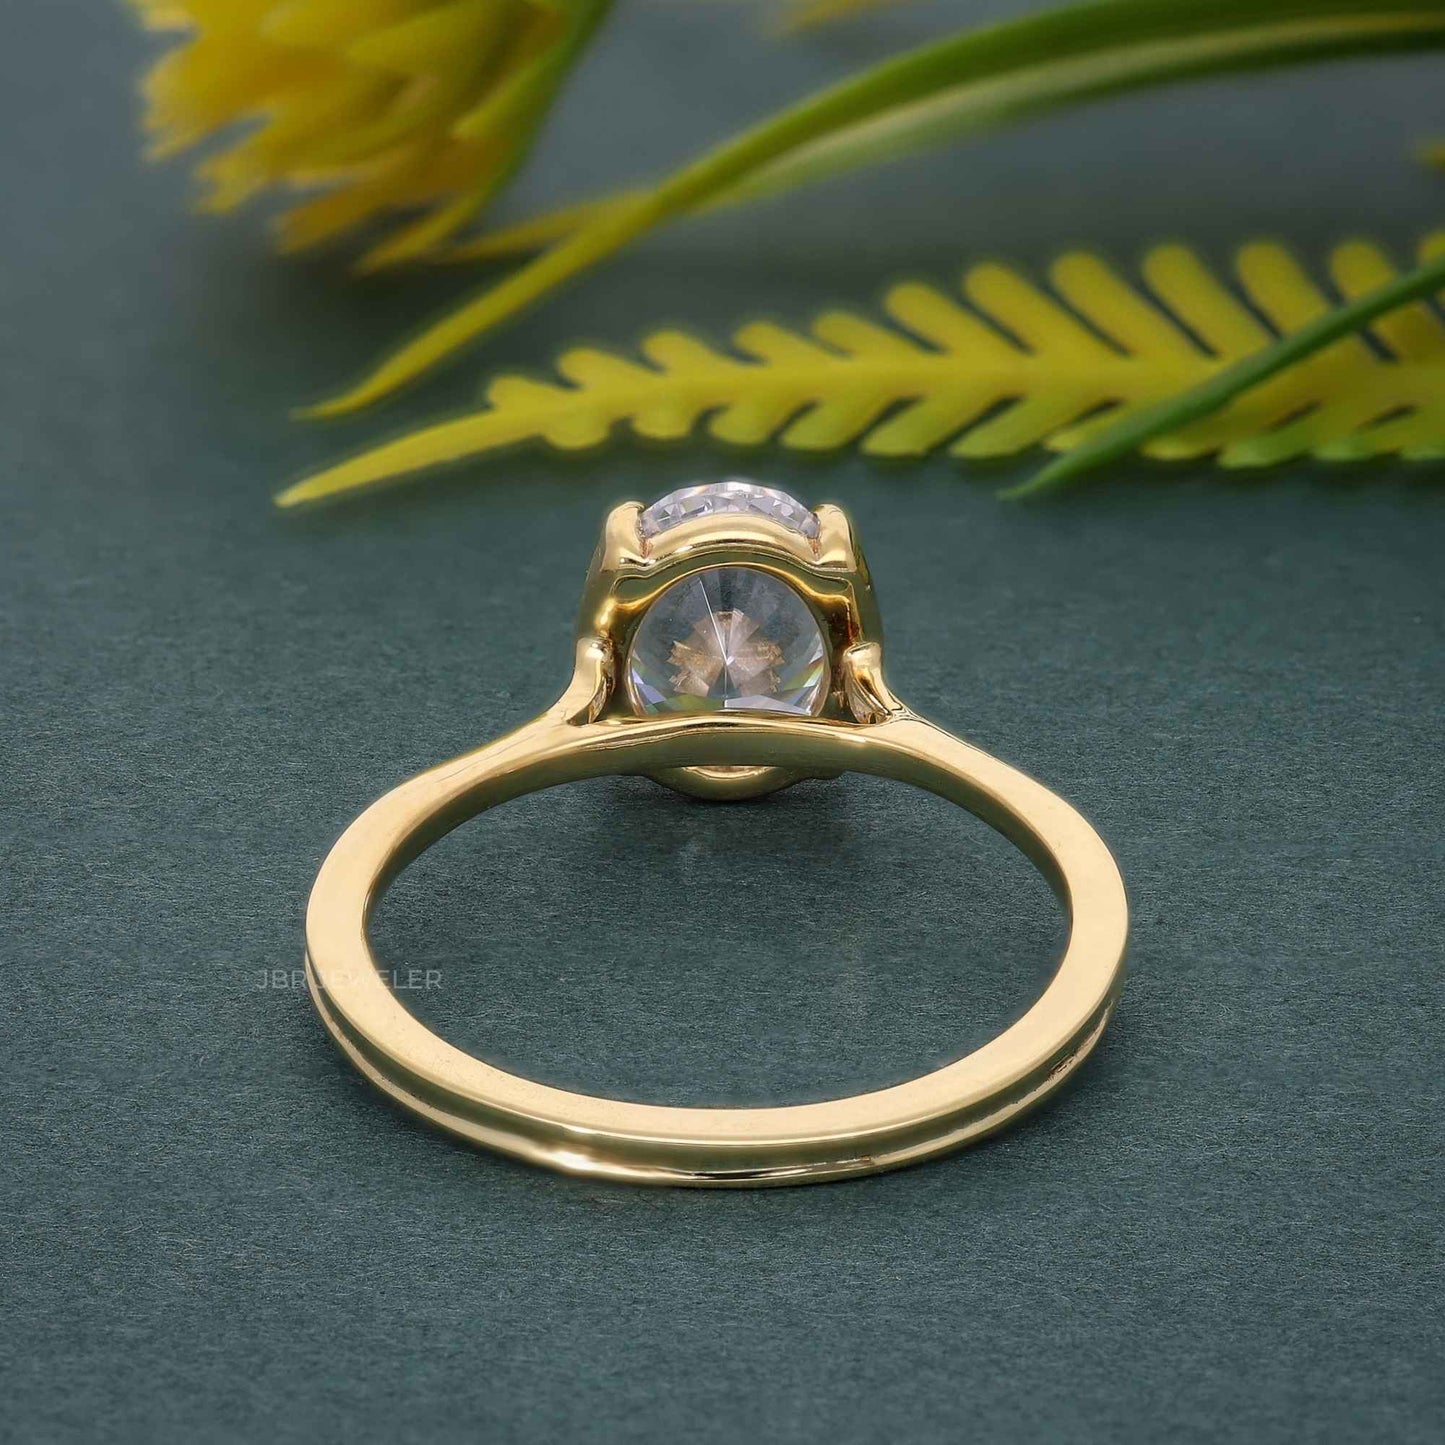 Silhouette Oval Moissanite Diamond Engagement Ring